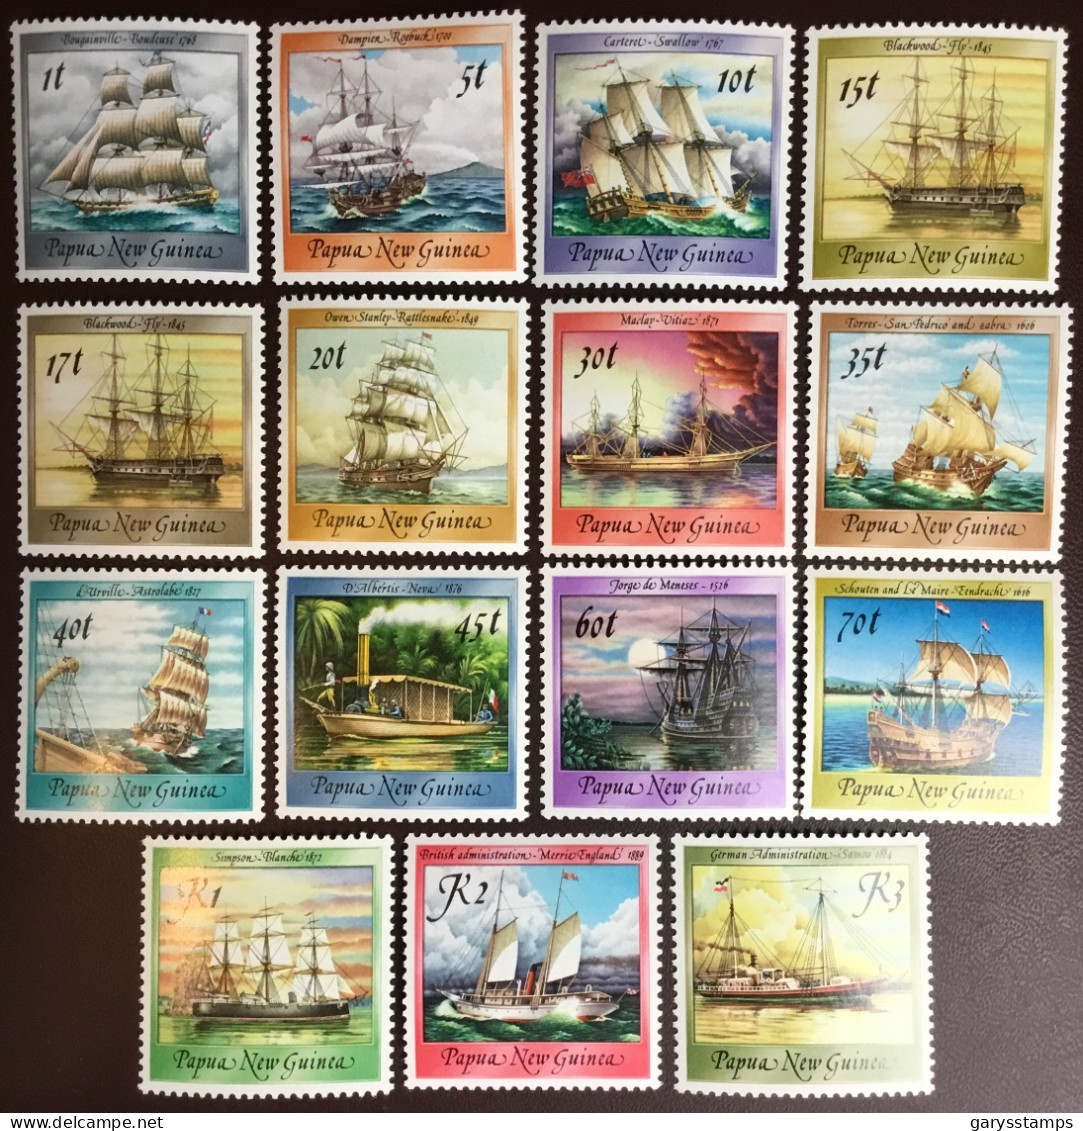 Papua New Guinea 1987 - 1988 Ships Definitives Set Complete MNH - Papua-Neuguinea